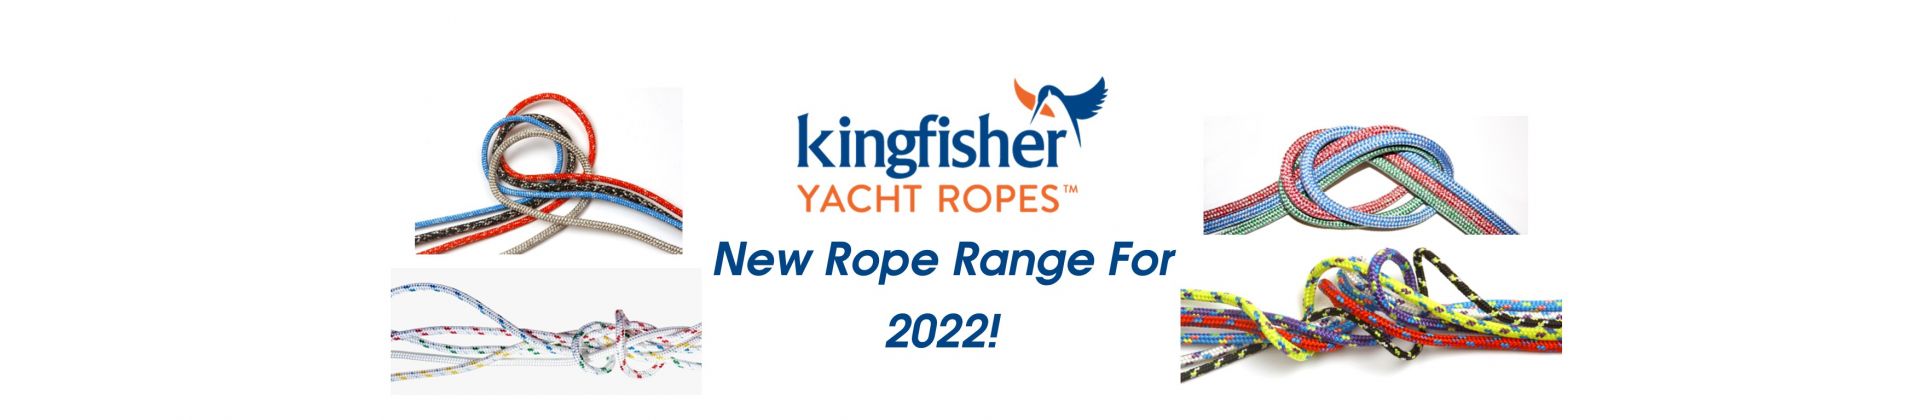 Kingfisher Yacht Ropes